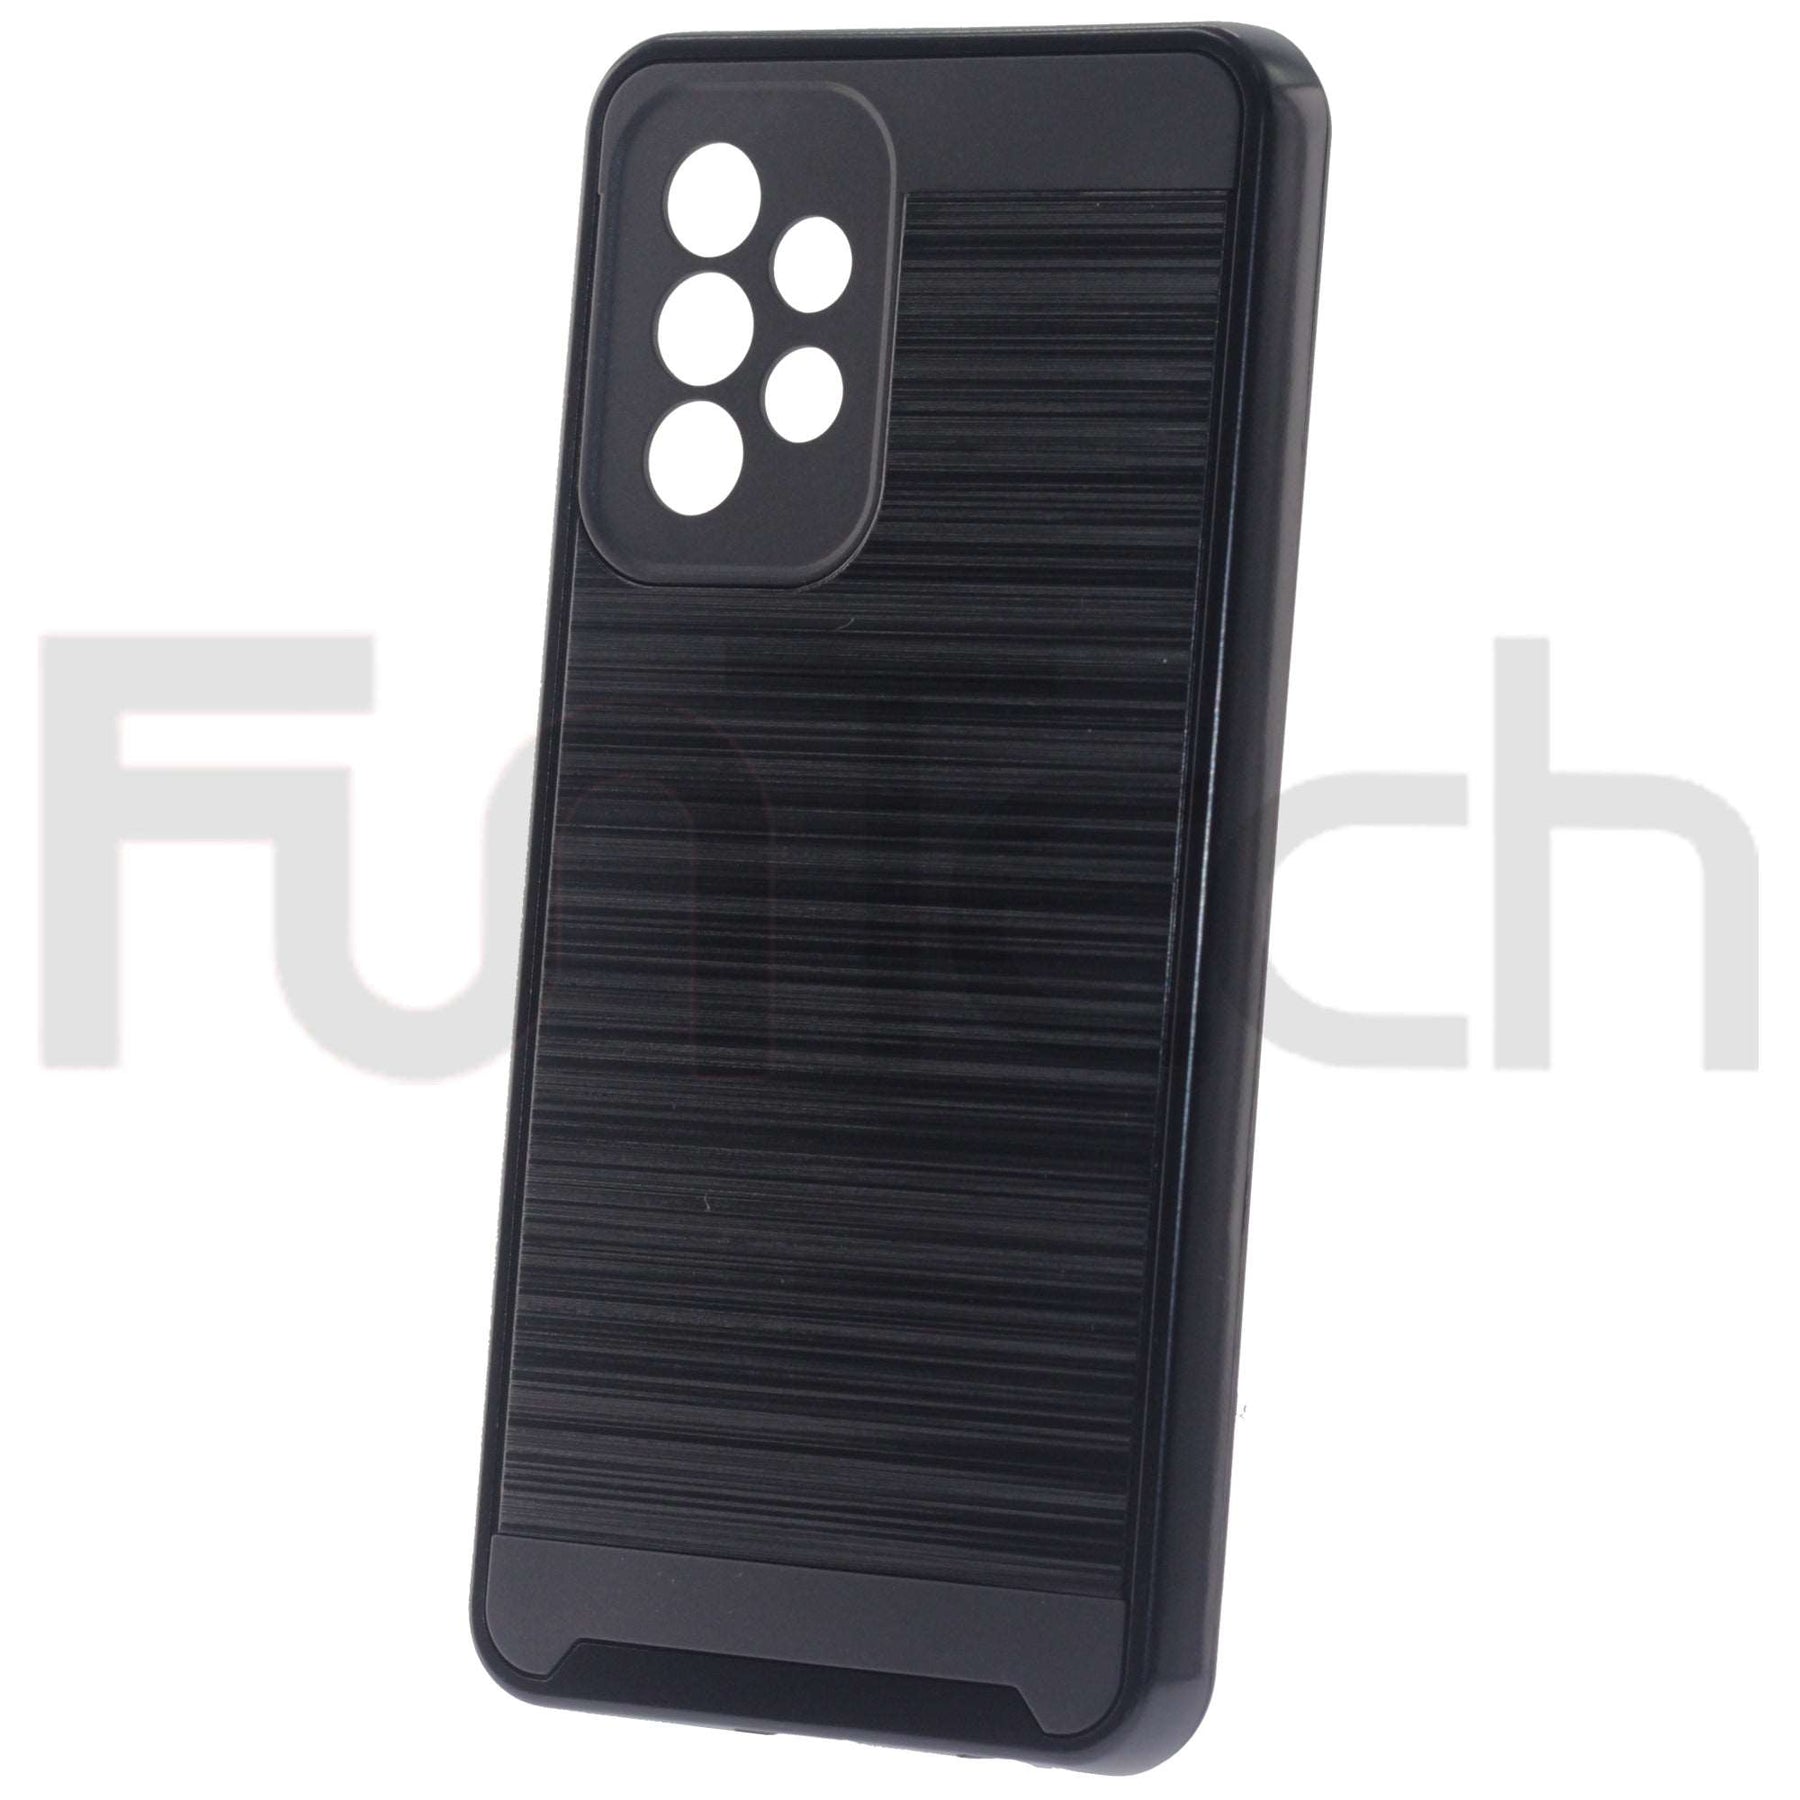 Samsung A52 (5G), Slim Armor Case, Color Black.